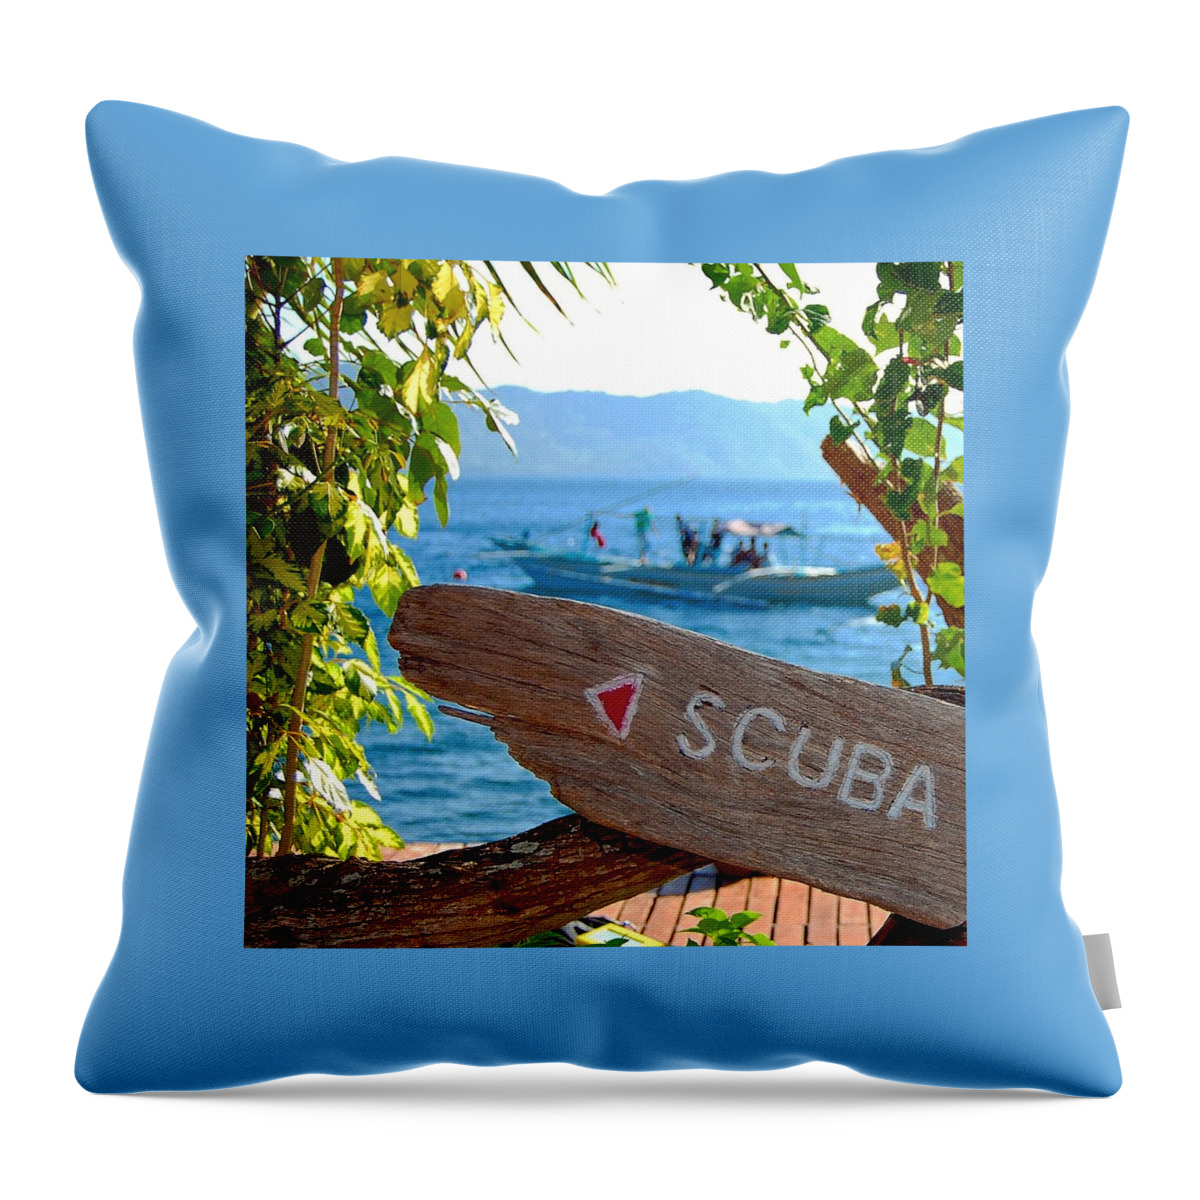 Scuba Throw Pillow featuring the photograph Scuba by George G Esguerra